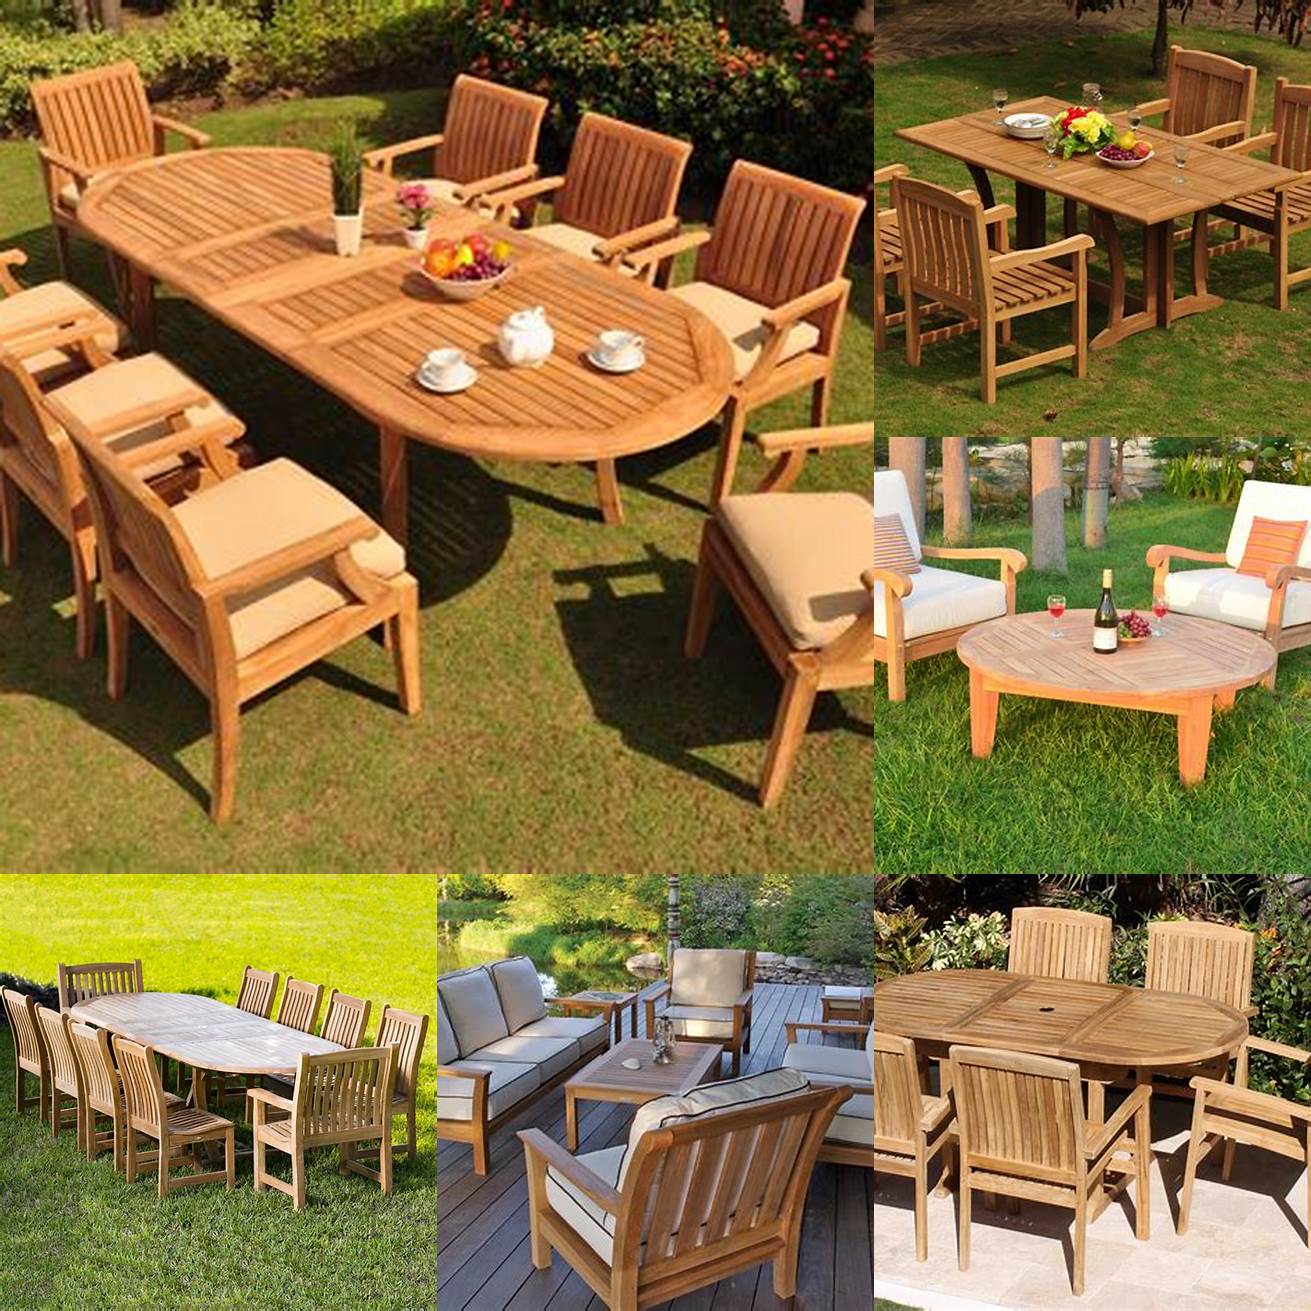 Teak furniture in outdoor settings